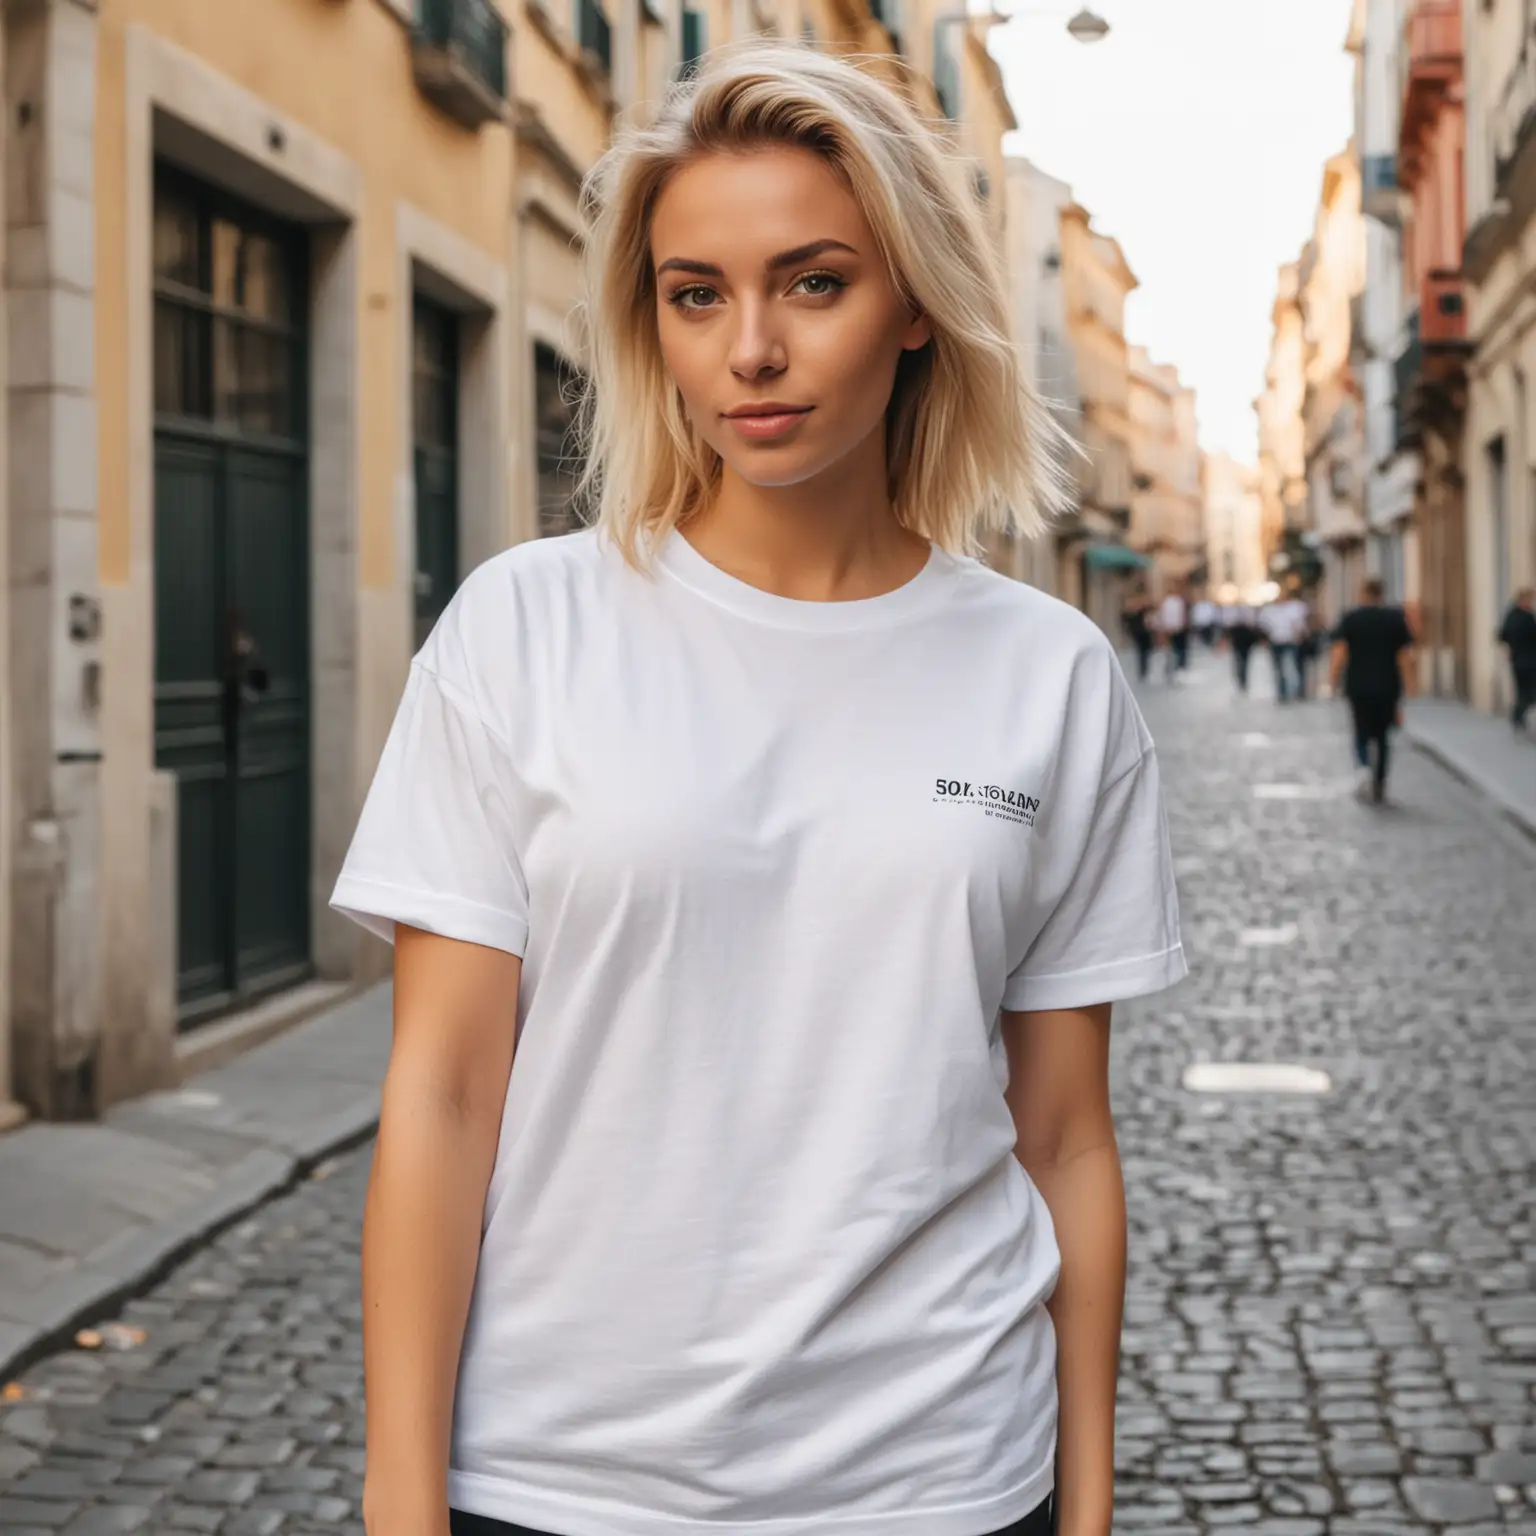 blonde woman wearing white oversized gildan 5000 t-shirt, europe street background, facing front